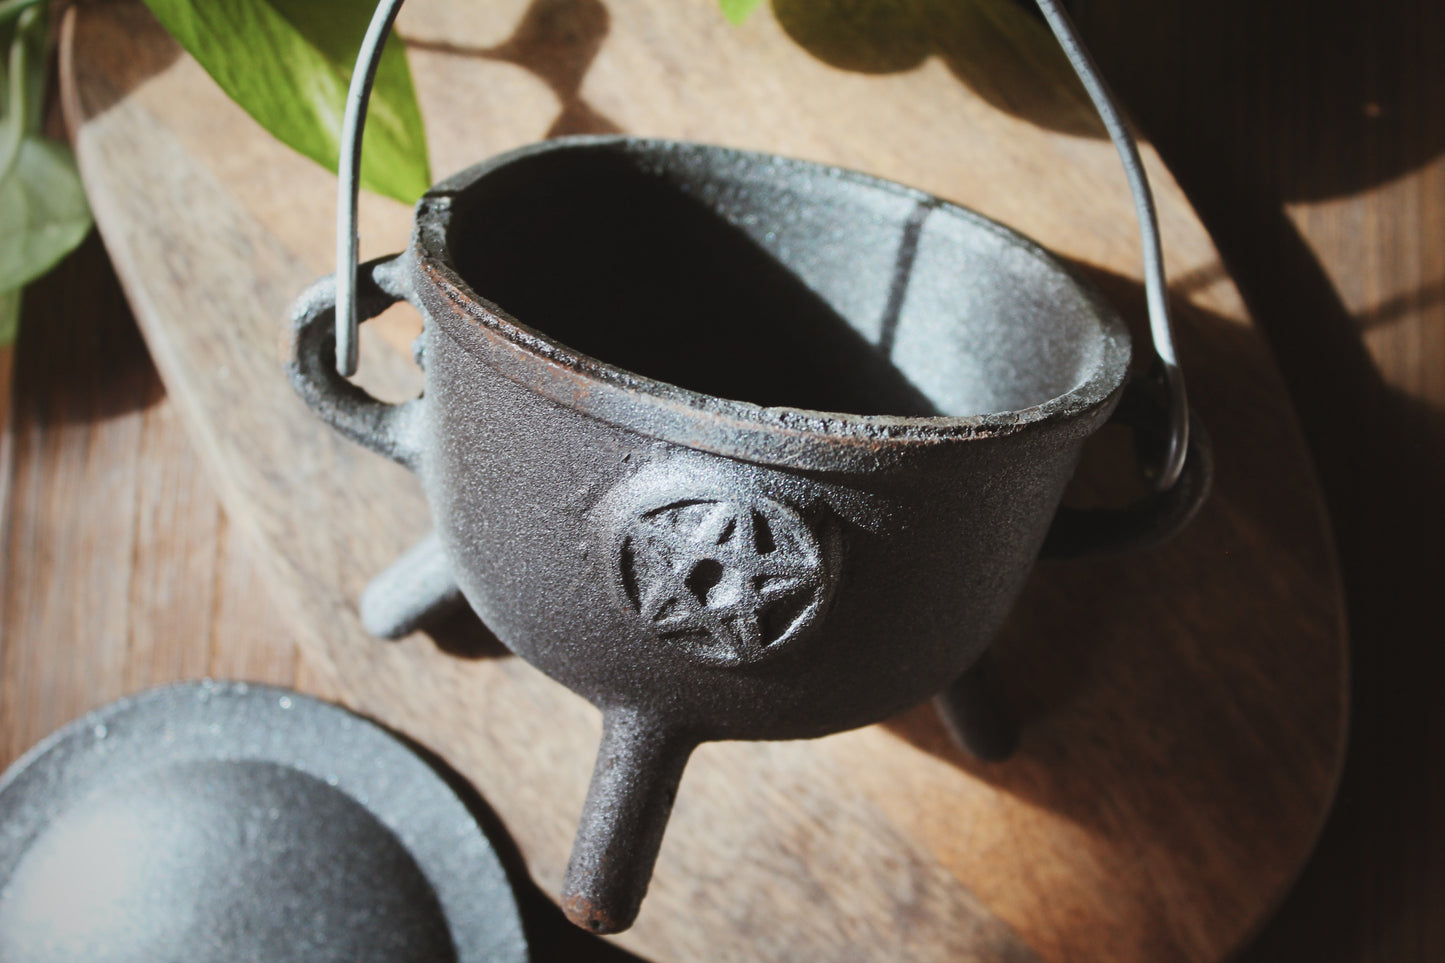 Pentagram Medium Cast Iron Cauldron with Lid 4.5 inch